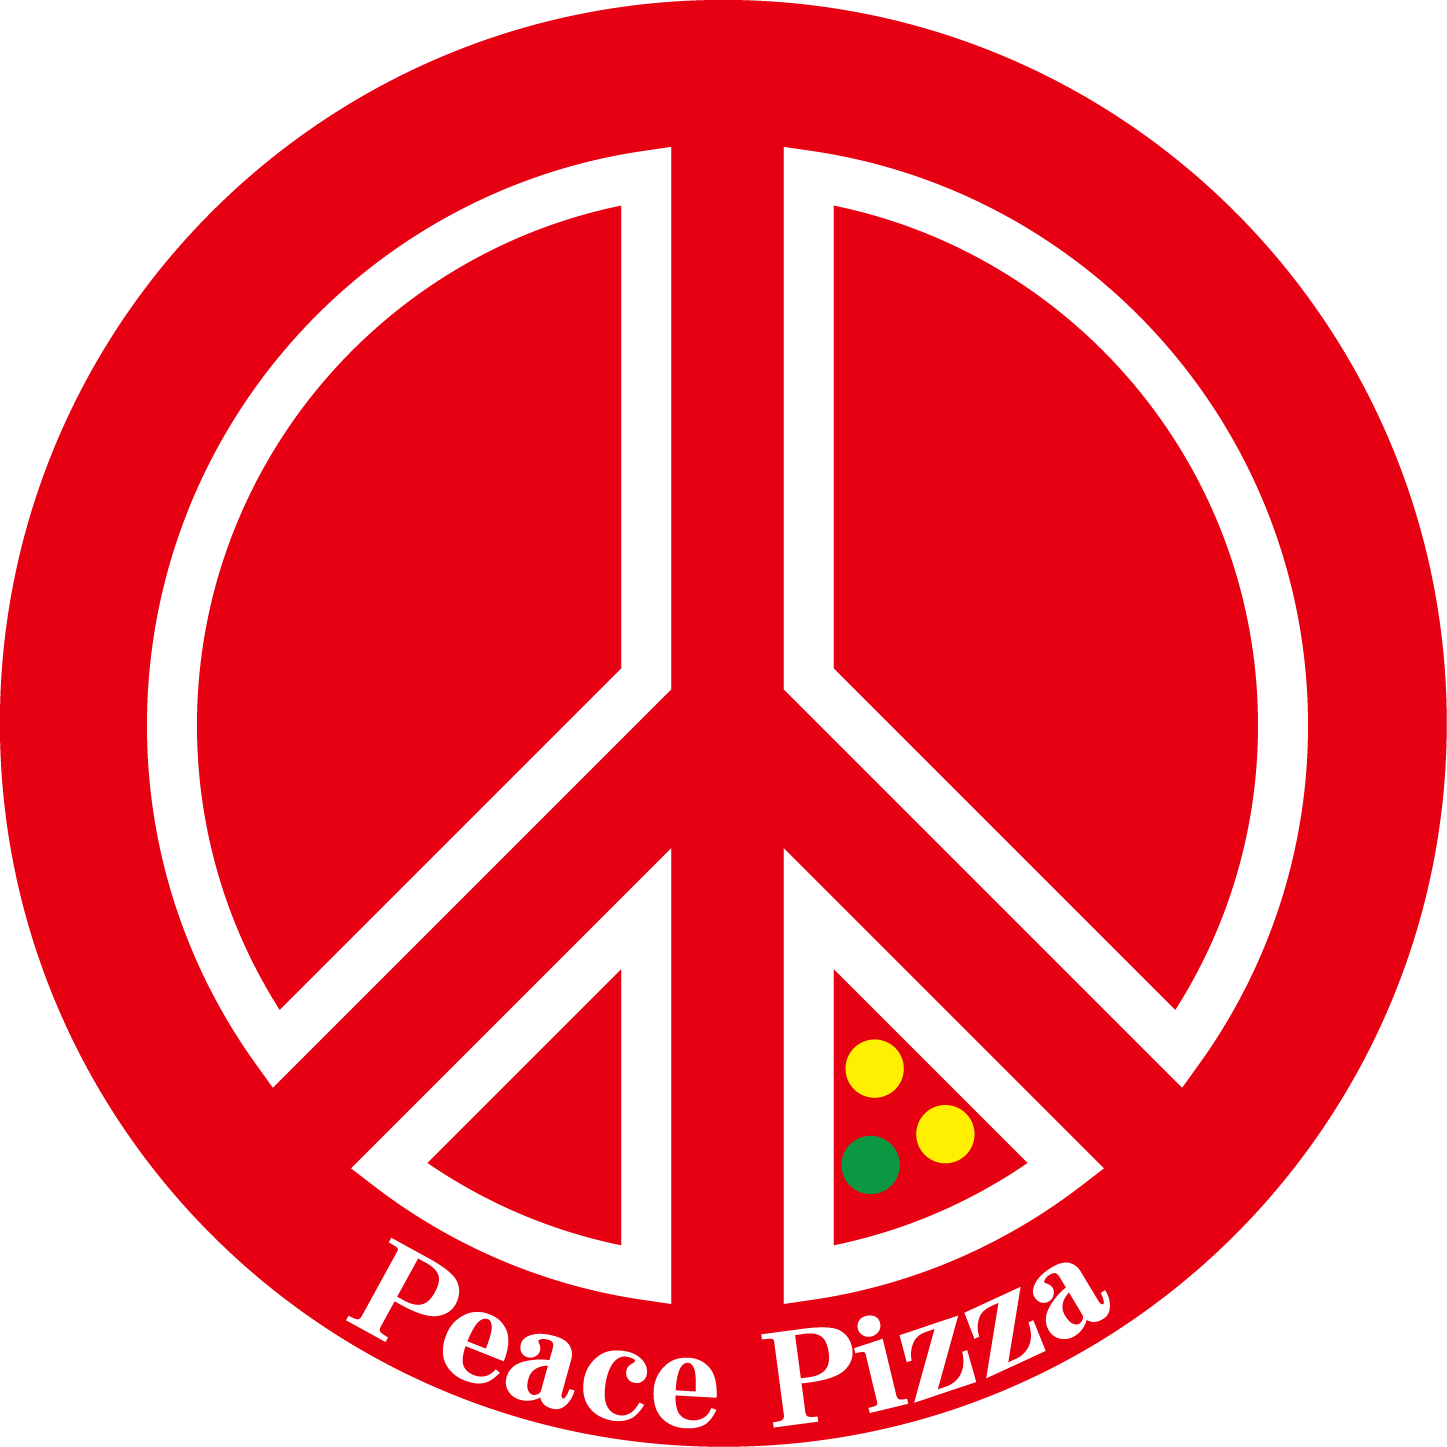 Peace Pizza